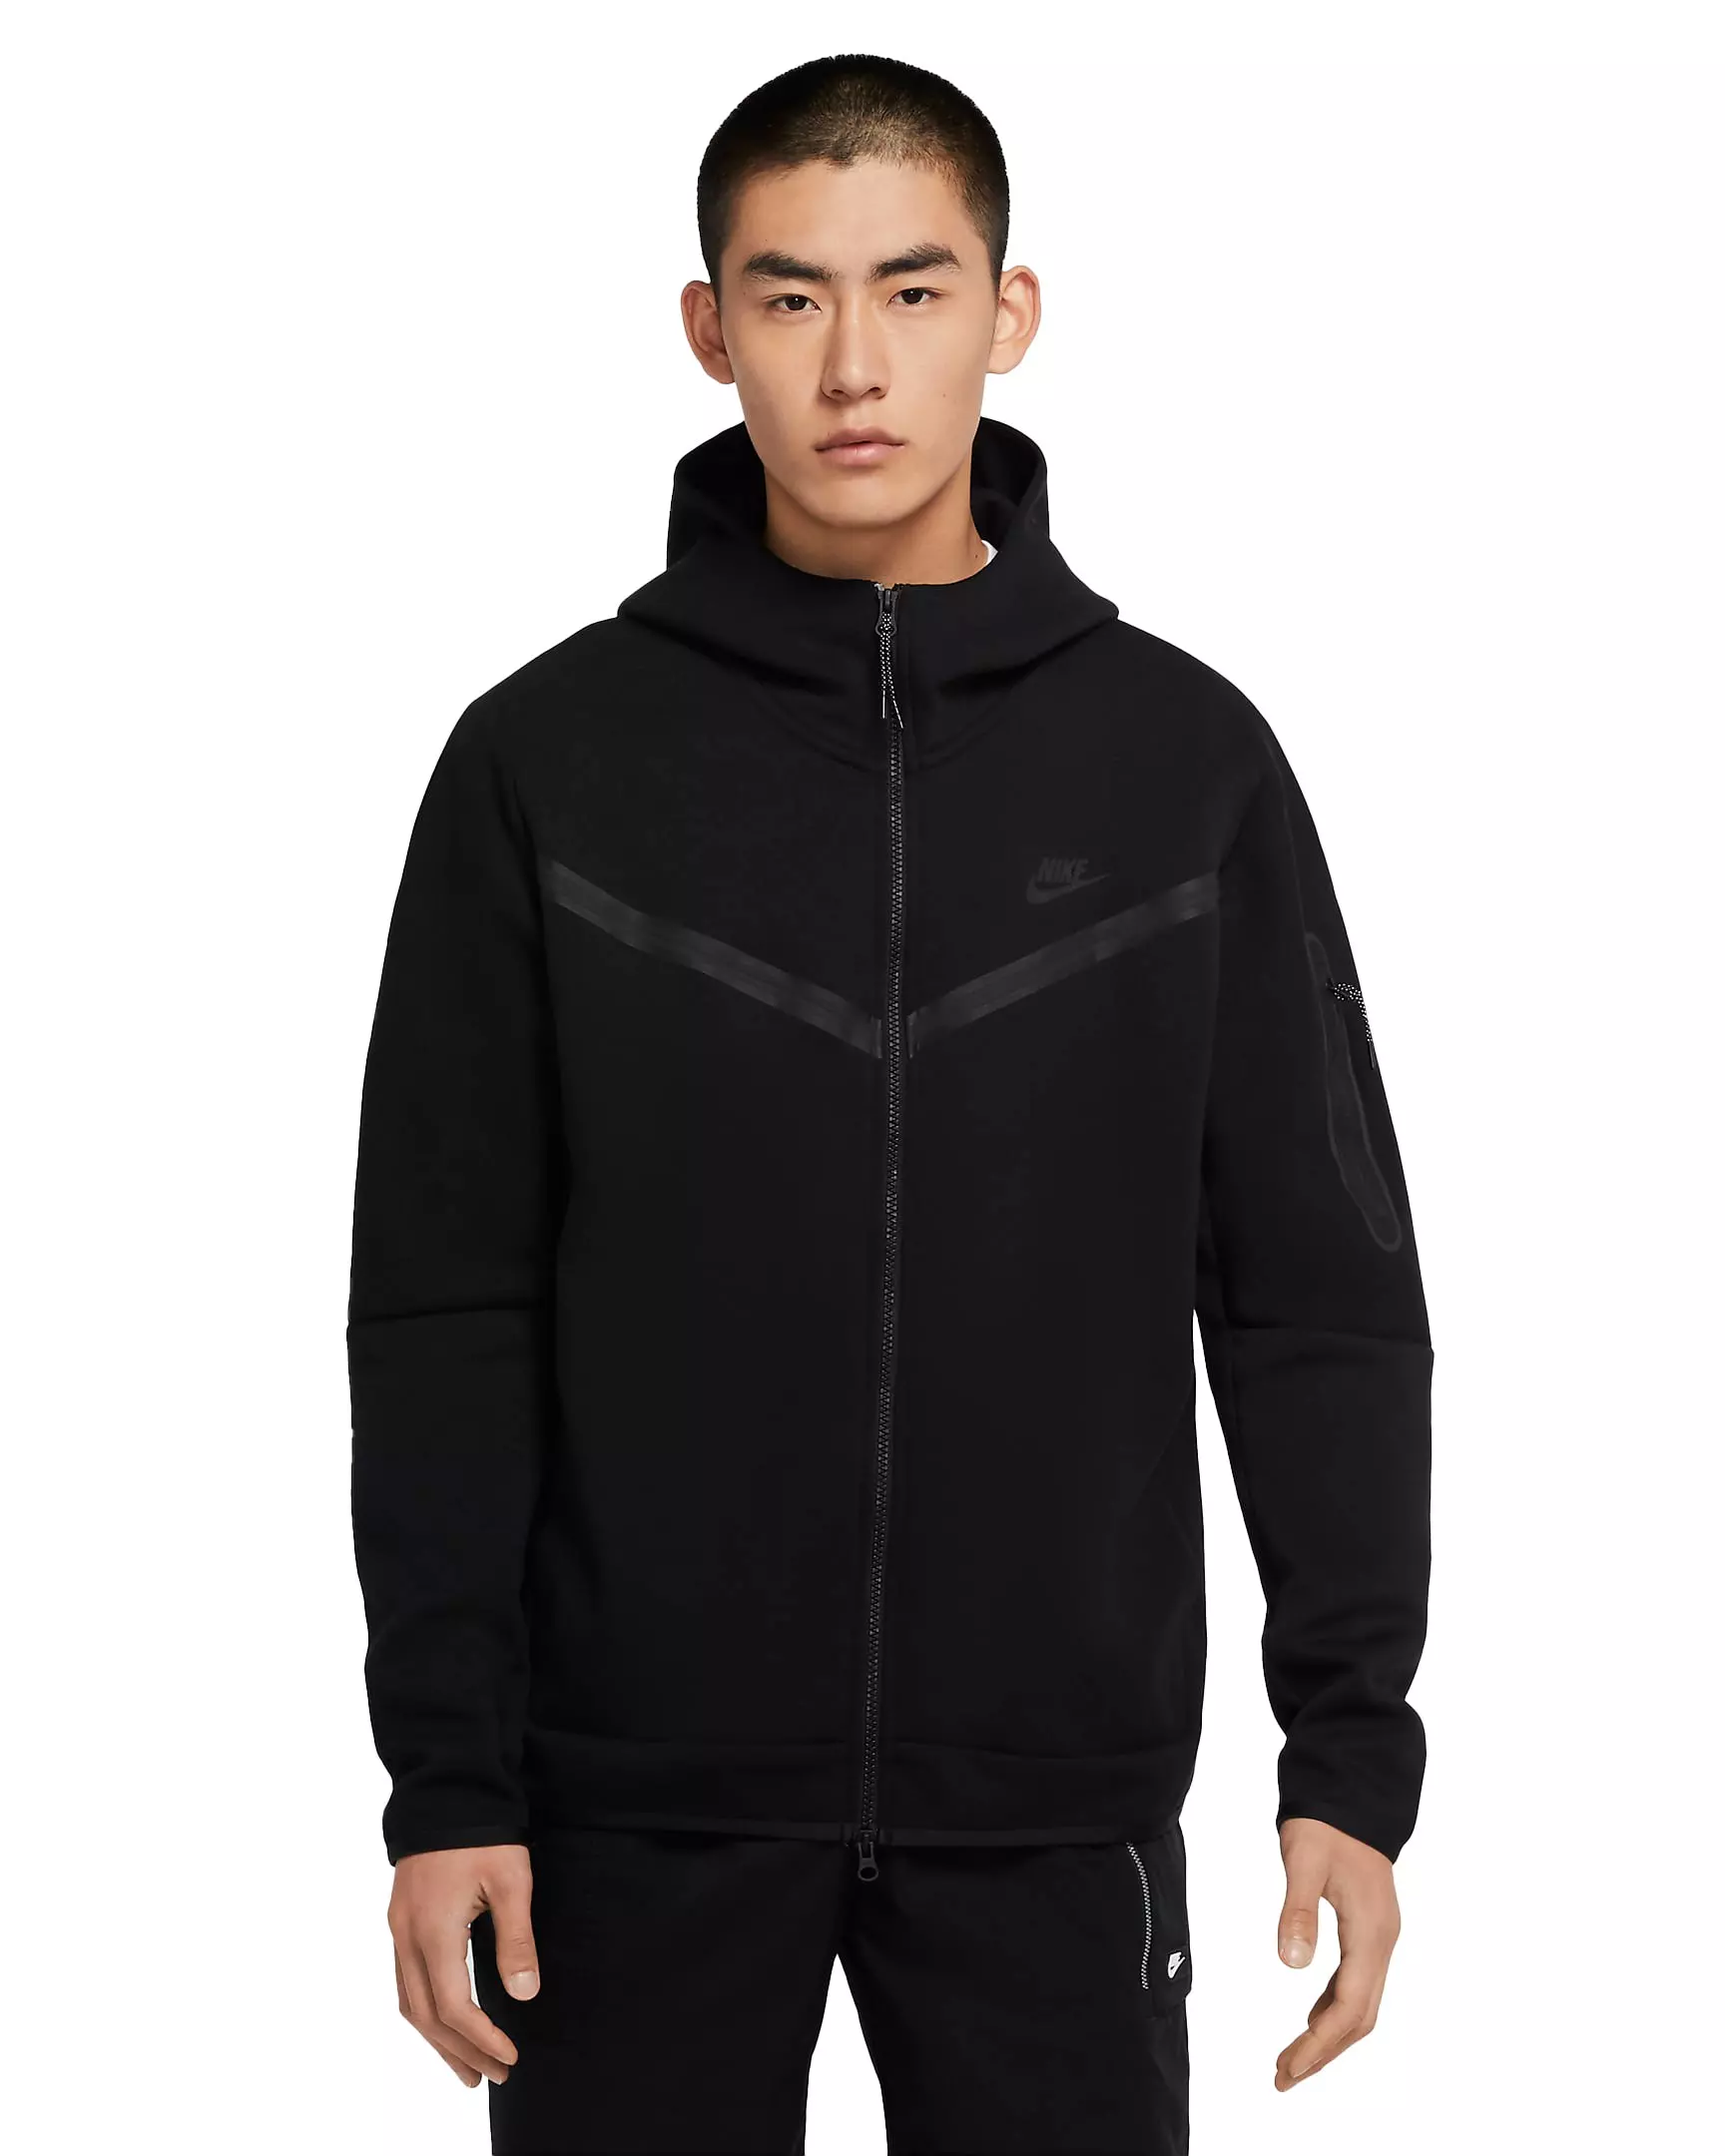 Nike Tech Fleece Jacket Gray Mens 3XL Full Zip Hoodie Sweatshirt